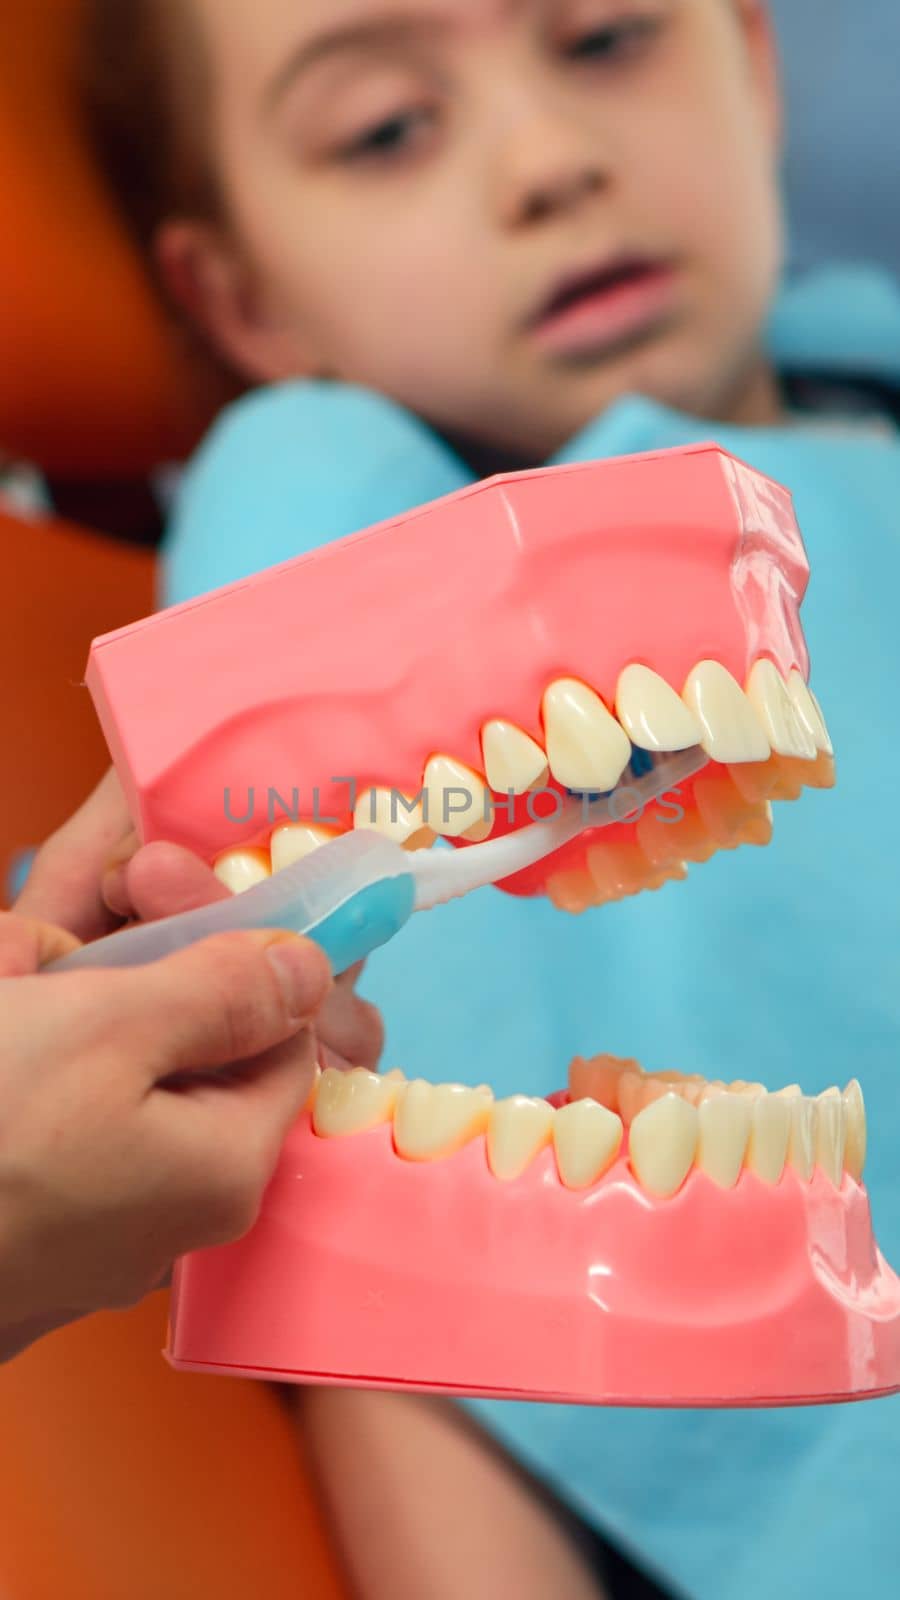 Pediatric dentist showing the correct dental hygiene using mock-up of skeleton by DCStudio